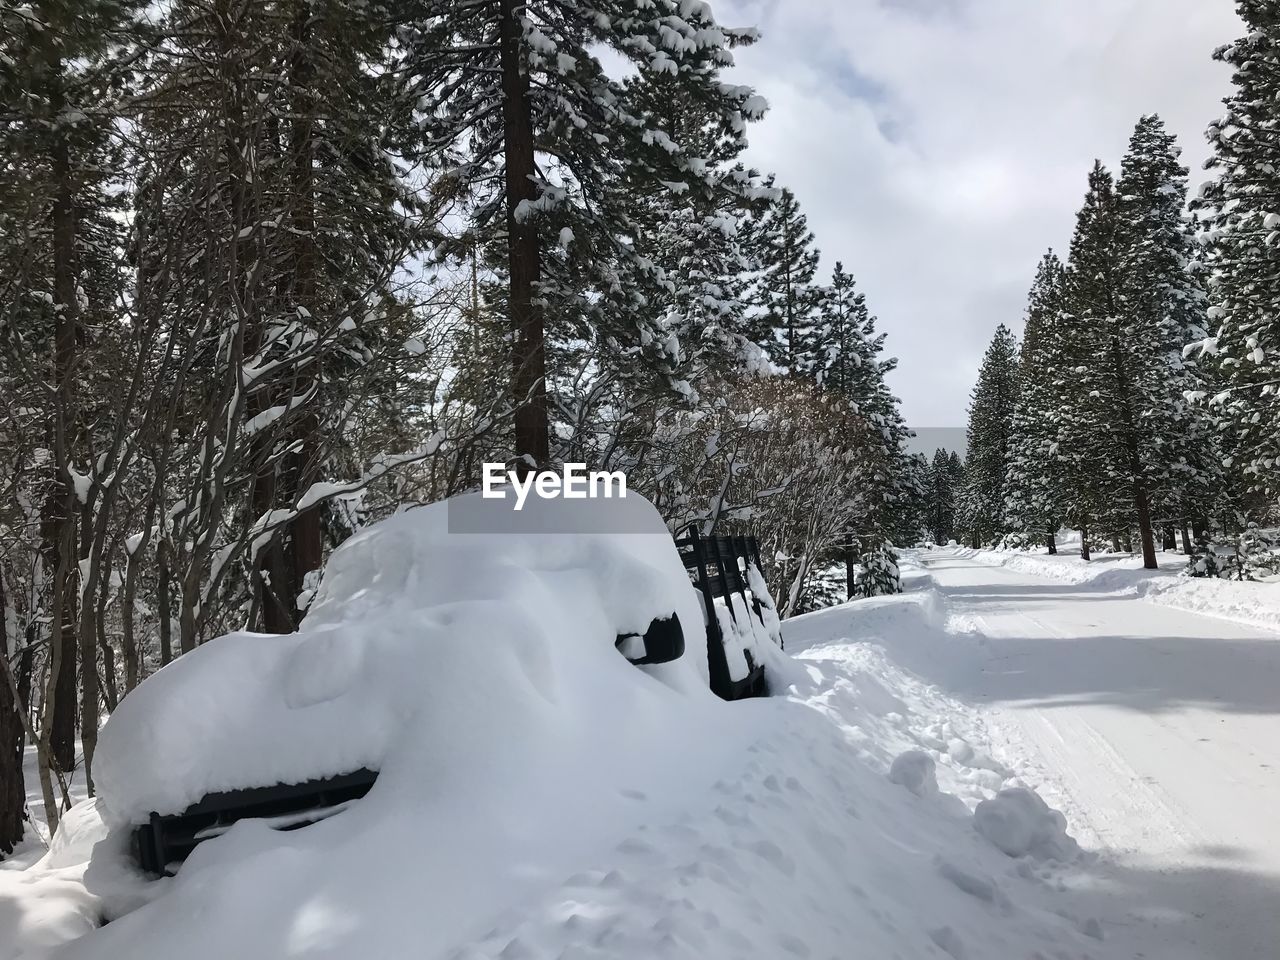 SNOWCAPPED TREES AGAINST SKY